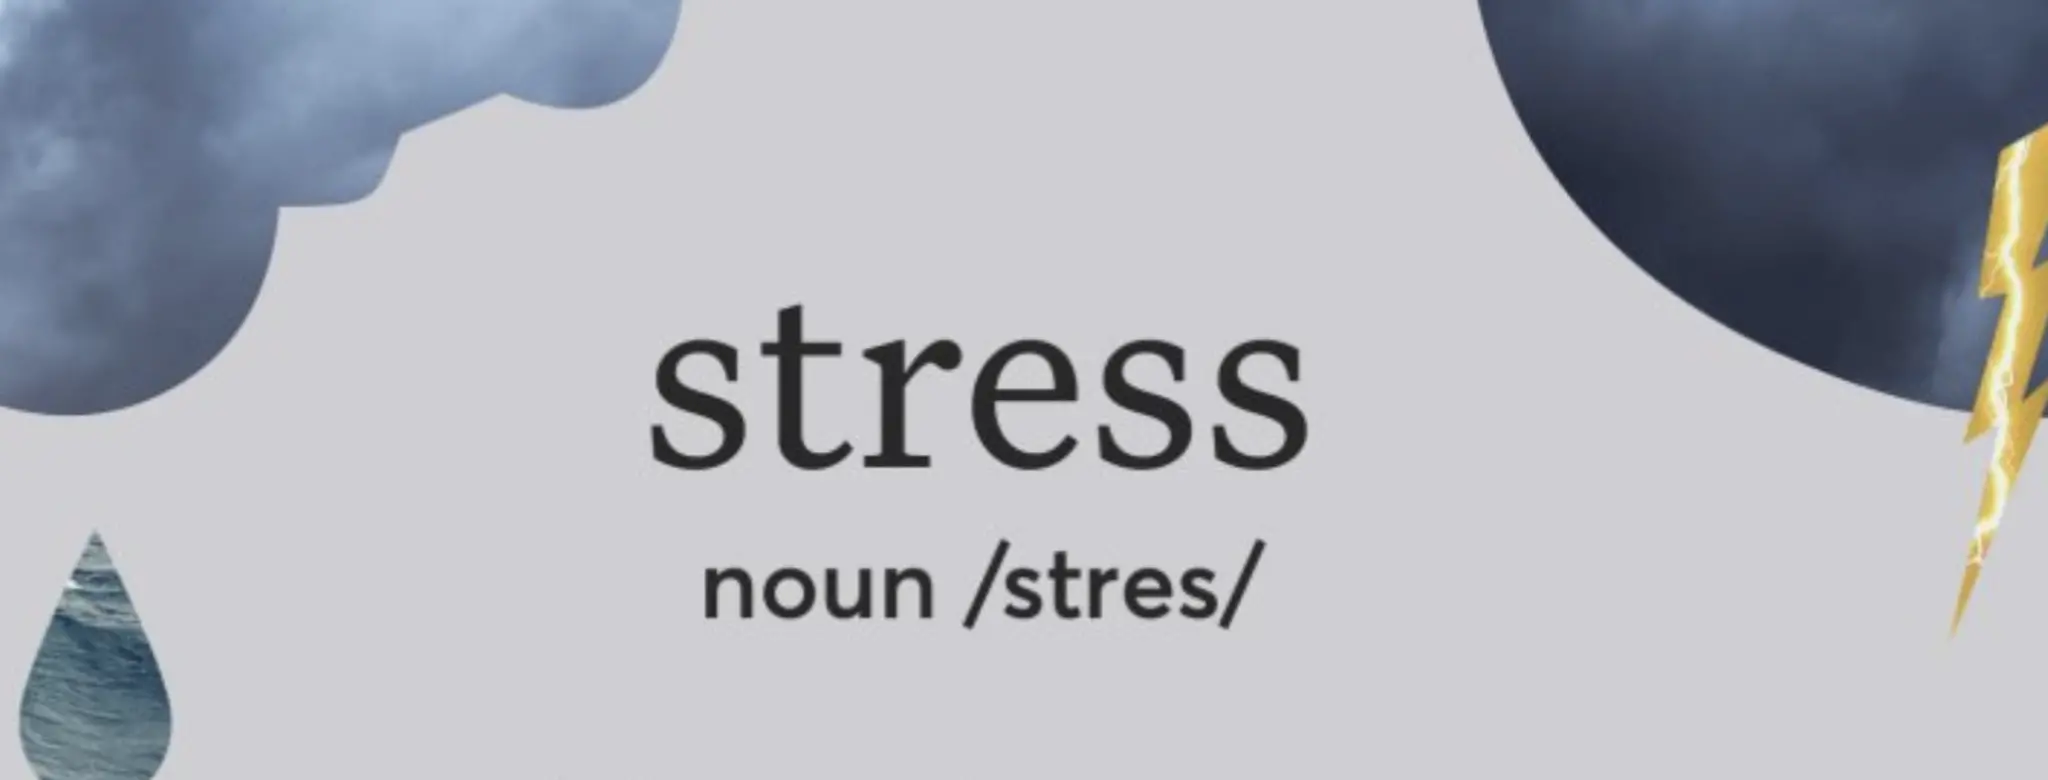 stress header